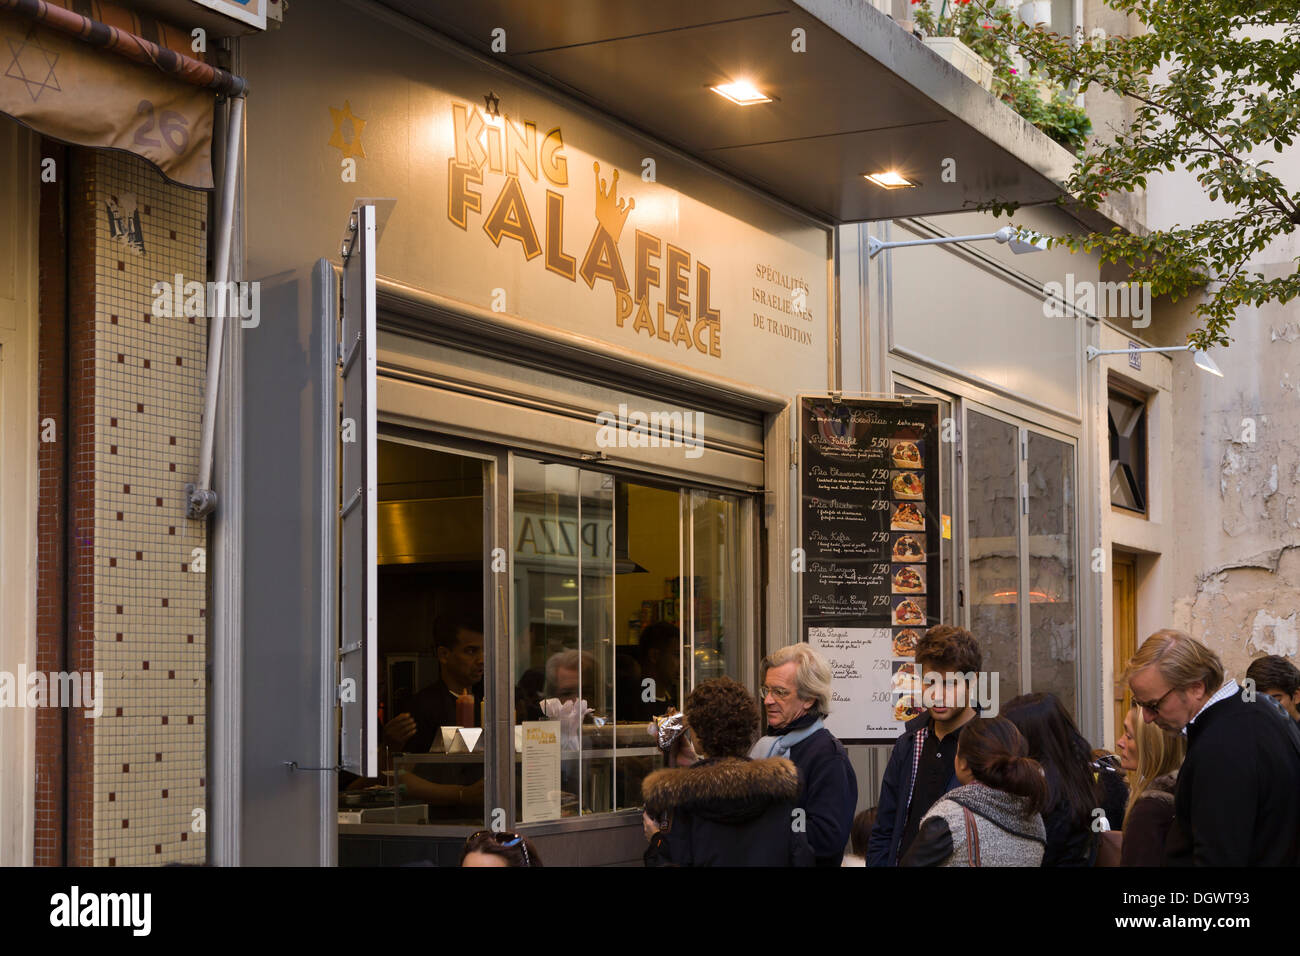 Falafel takeaway nella trafficata zona Marais di Parigi, Francia Foto Stock